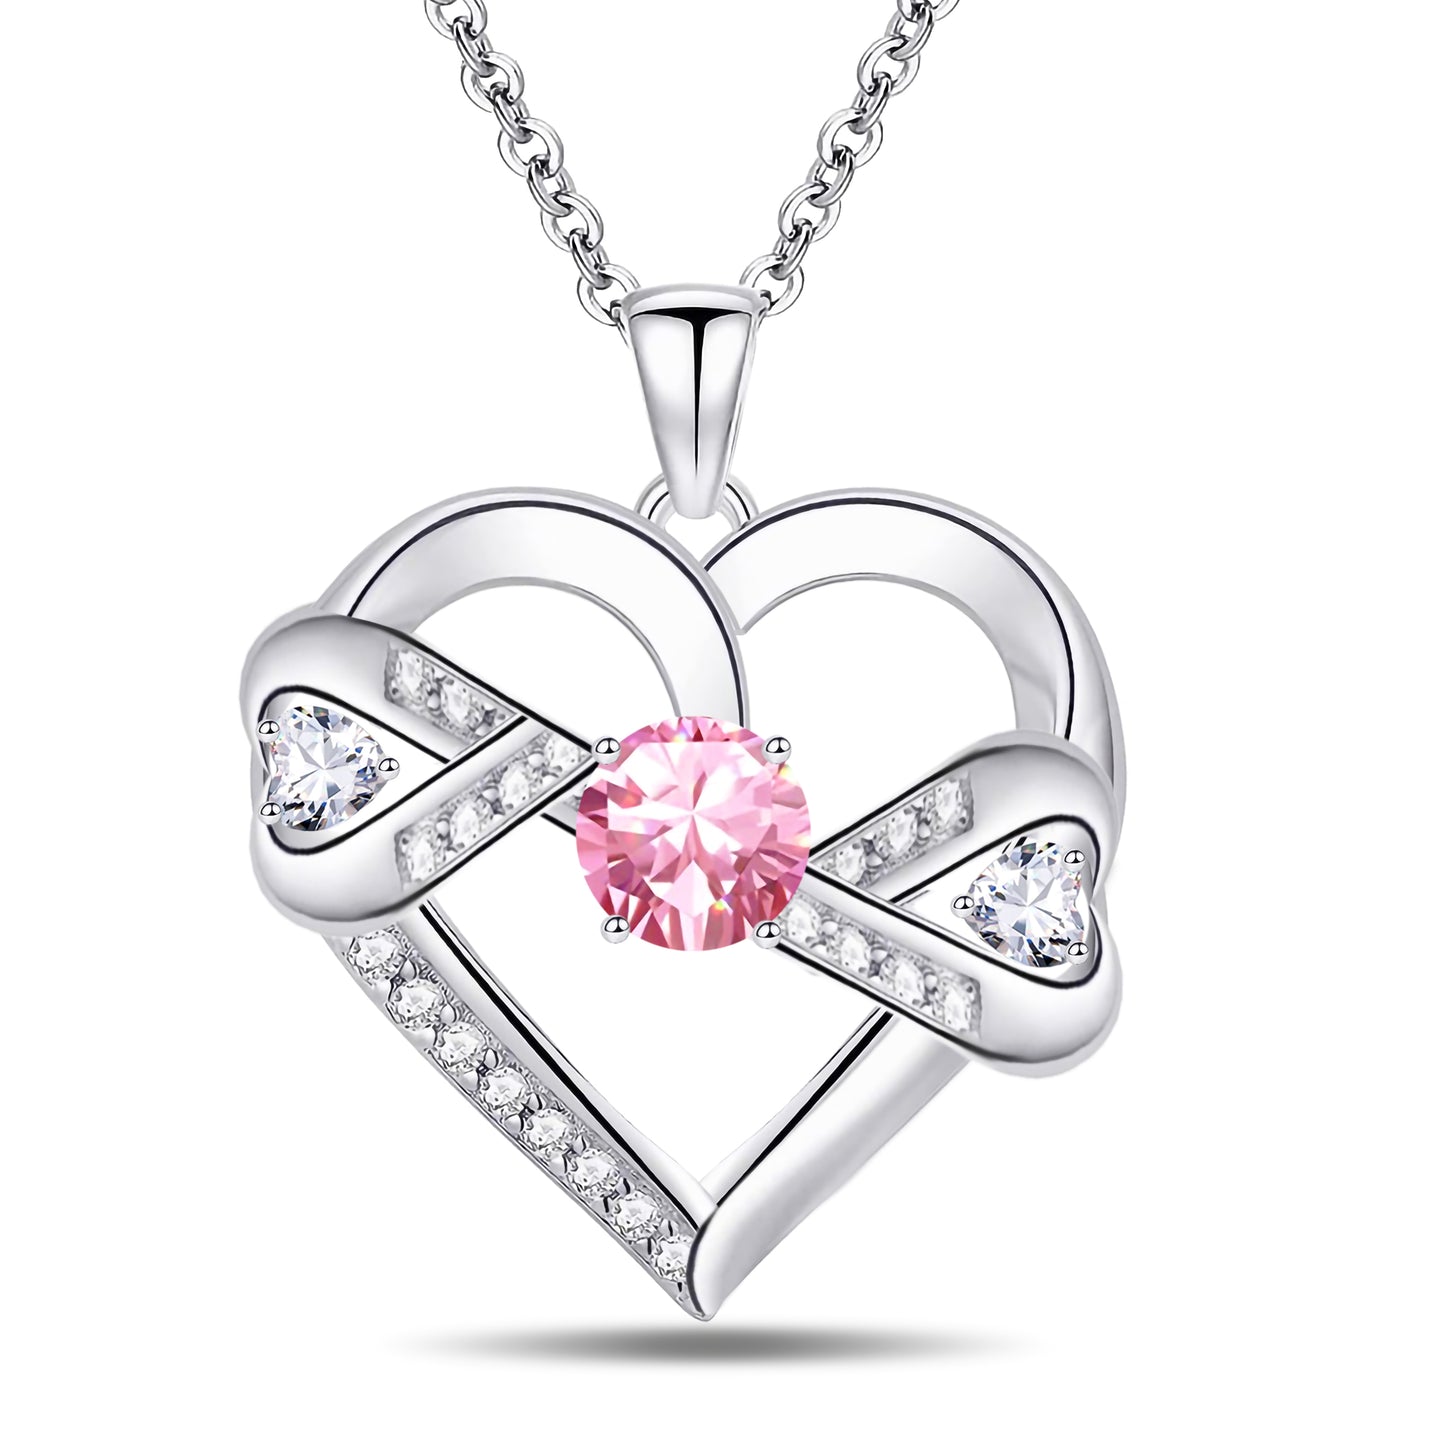 925 Silver 5A CZ Diamond Infinity Heart Pendant Necklace